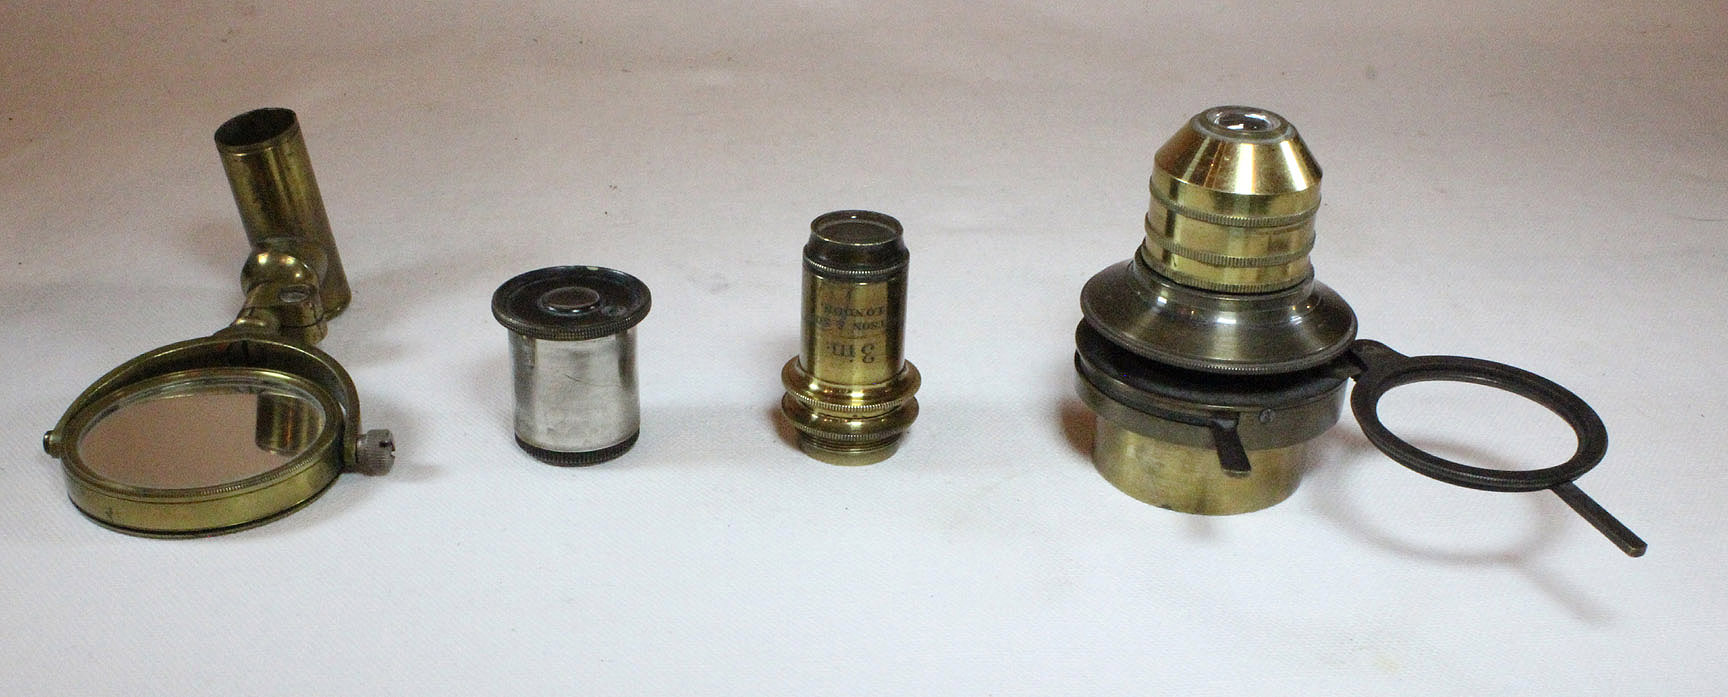 Fairservice microscope accesories